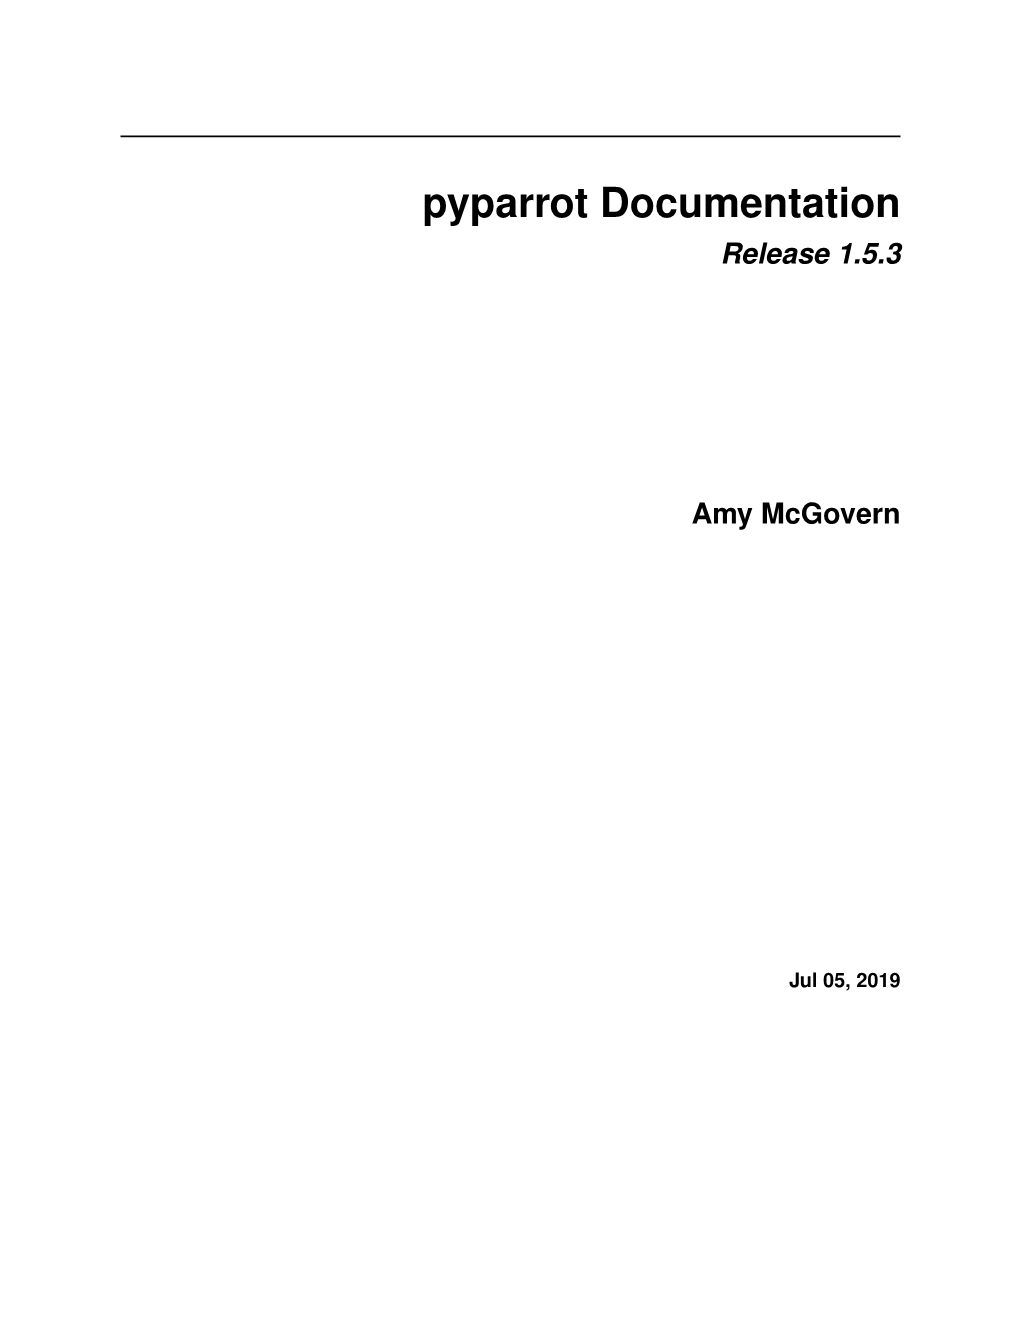 Pyparrot Documentation